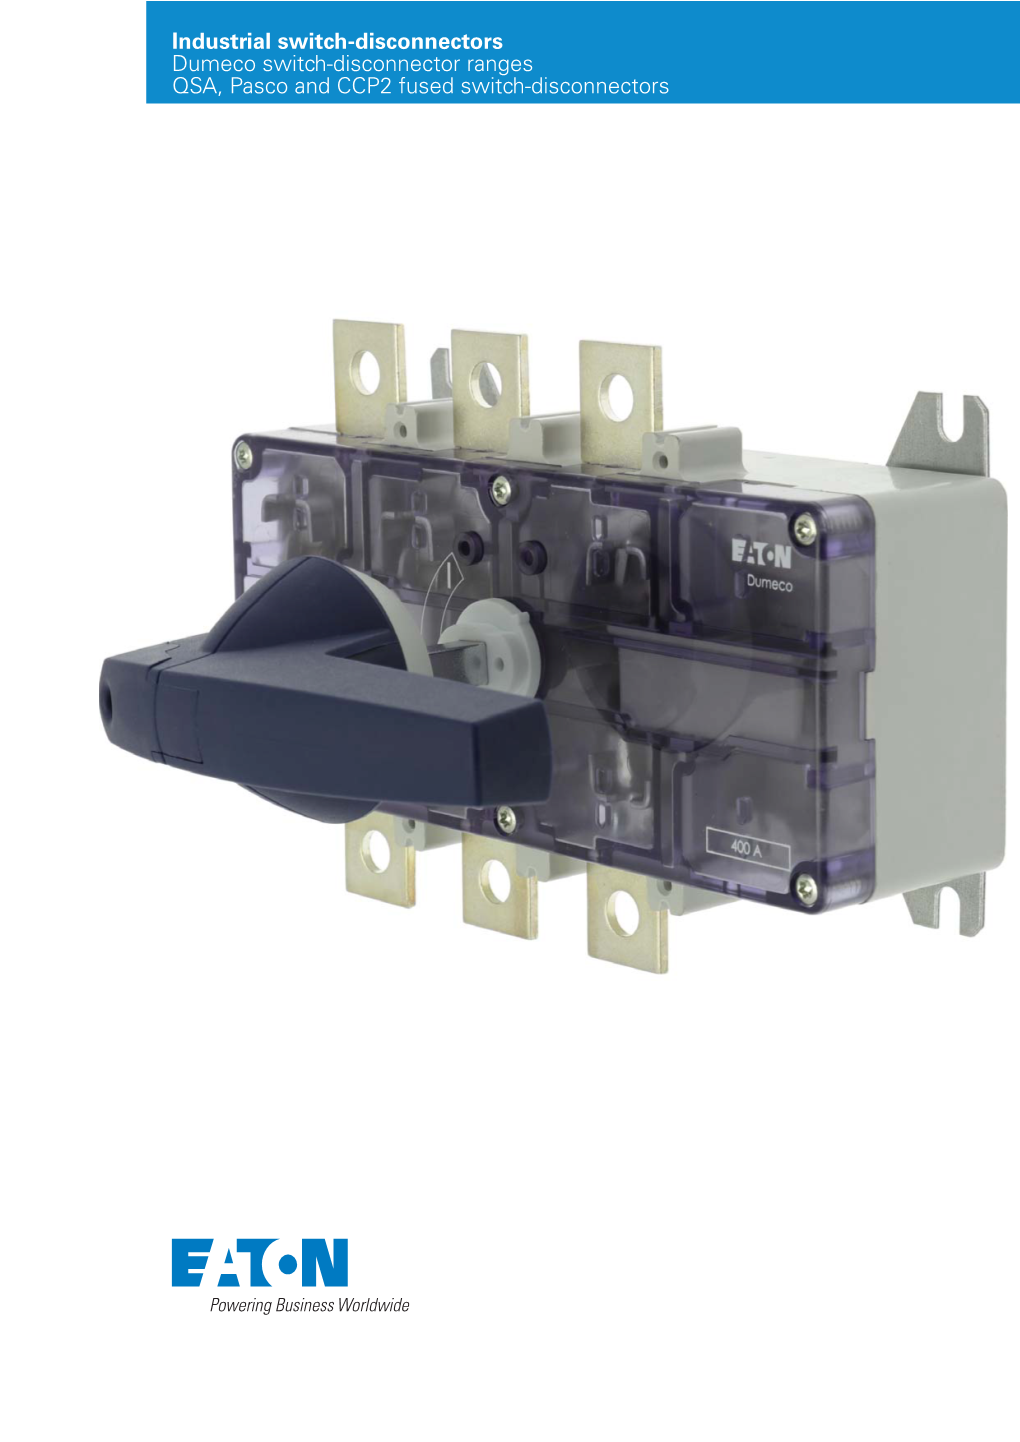 Eaton Industrial Switch-Disconnector Catalogue Ca008011en